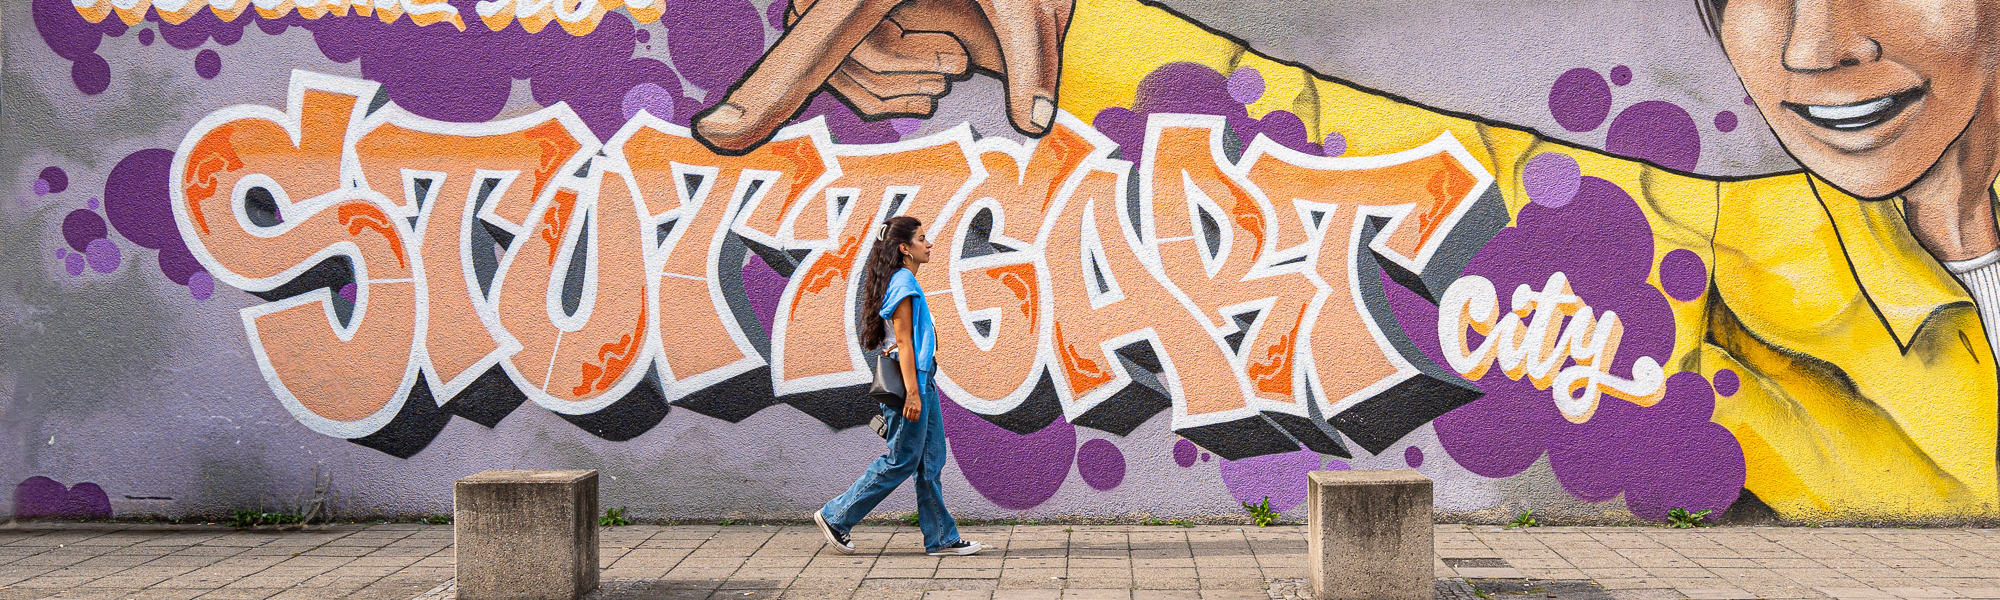 Graffiti avec l'inscription "Welcome to Stuttgart City"